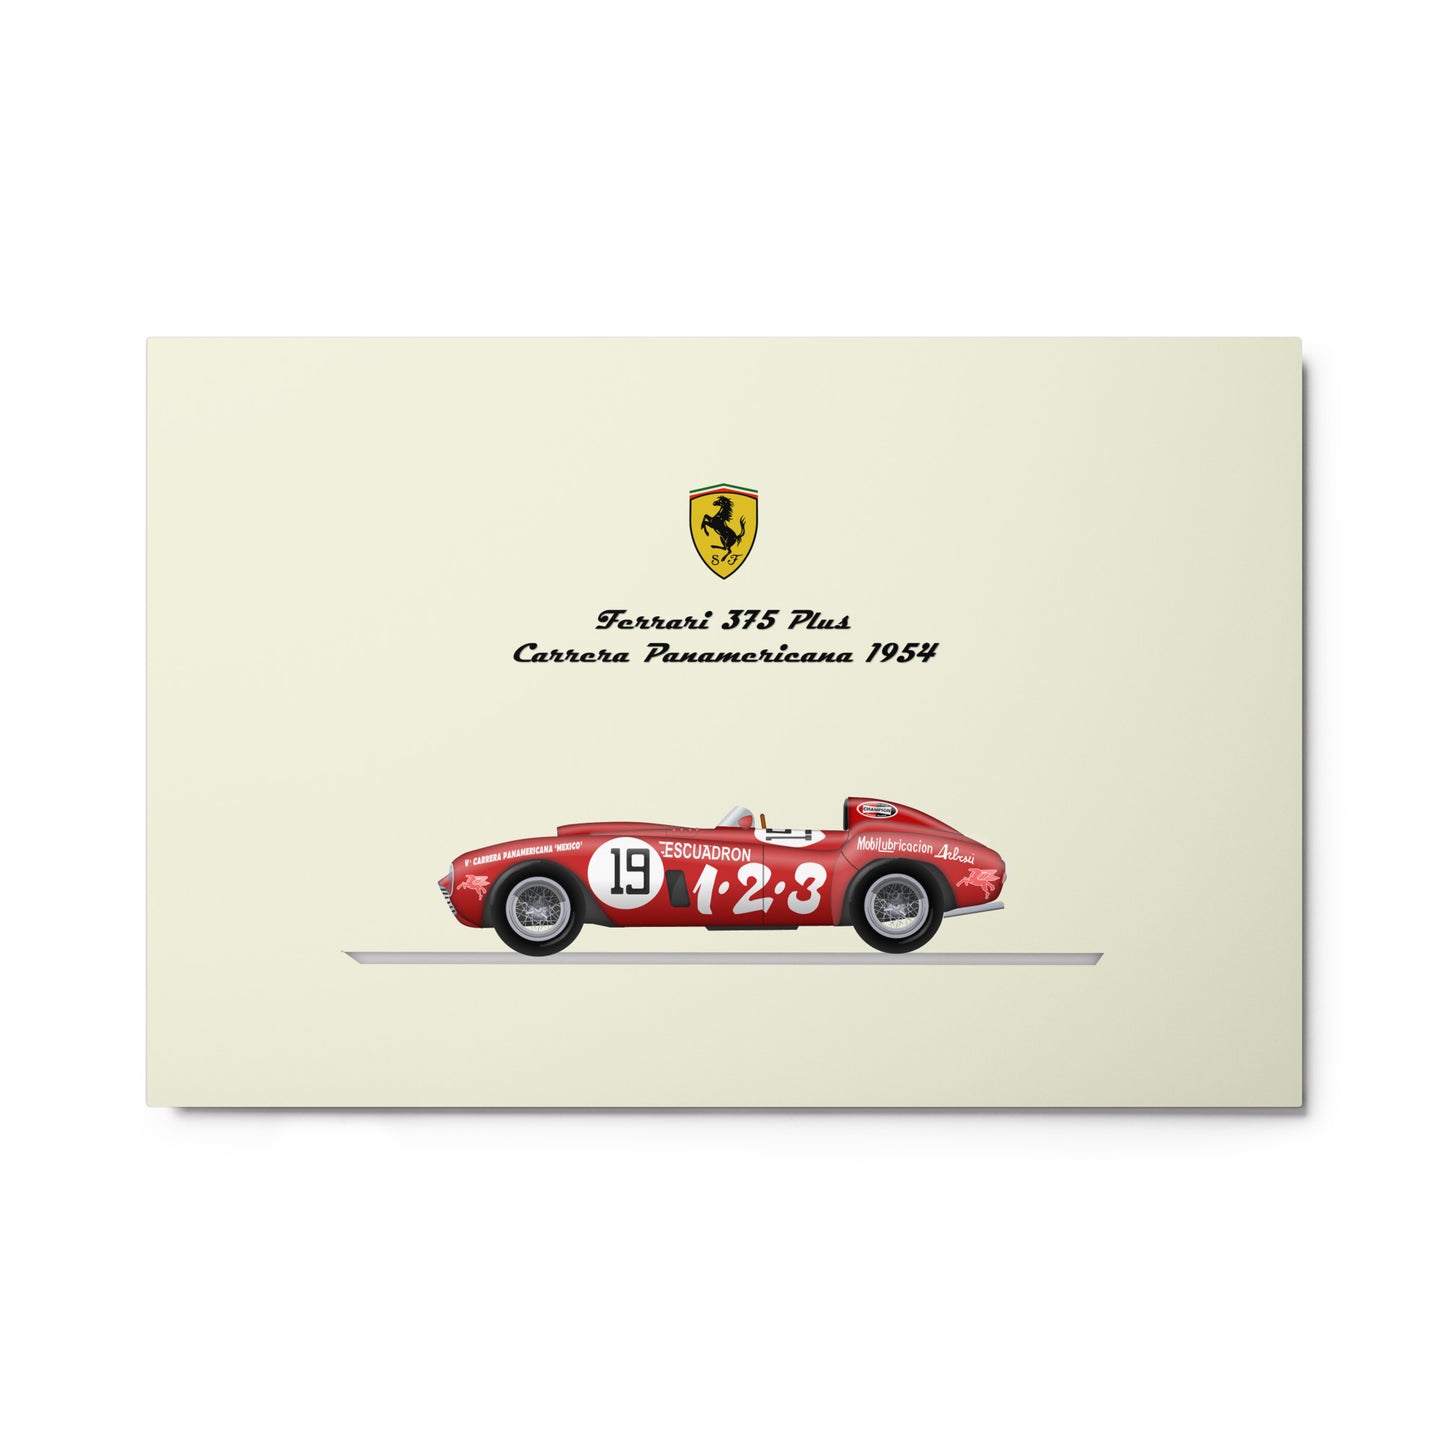 Car-WSC Ferrari 375 Plus-Carrera 1954 By Gianfranco Lanini